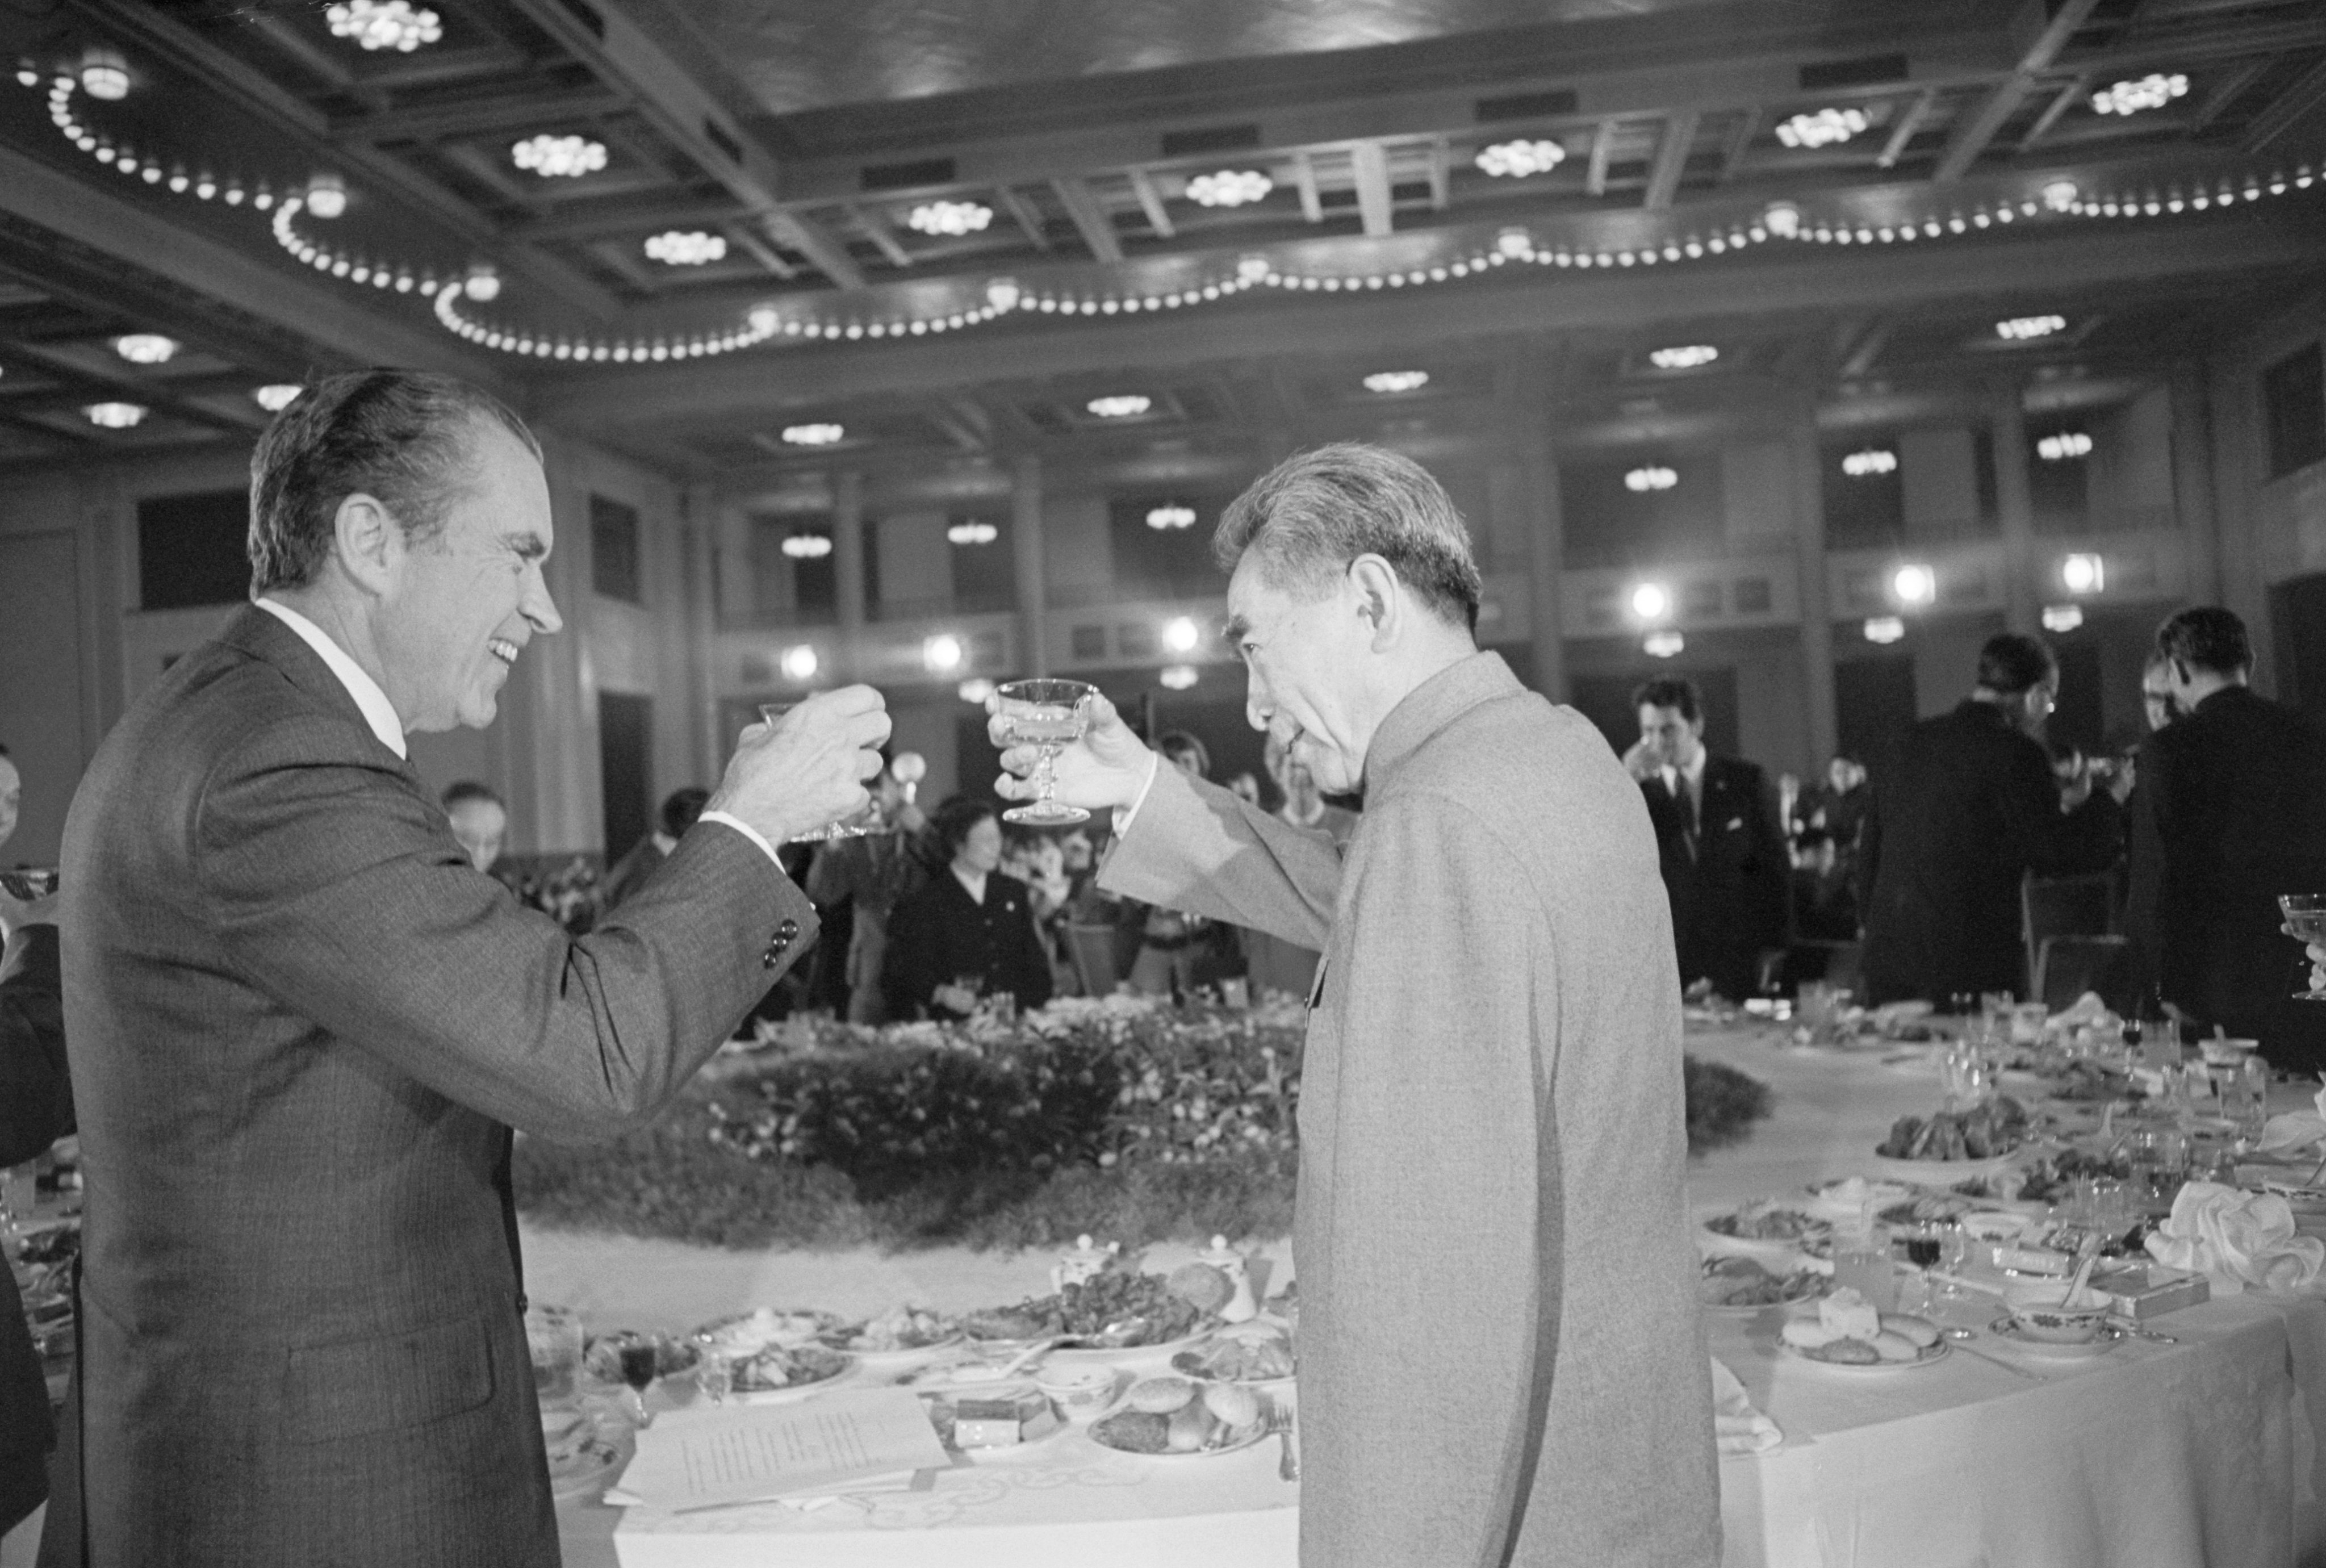 Pres. Nixon And Chou En-Lai Toasting